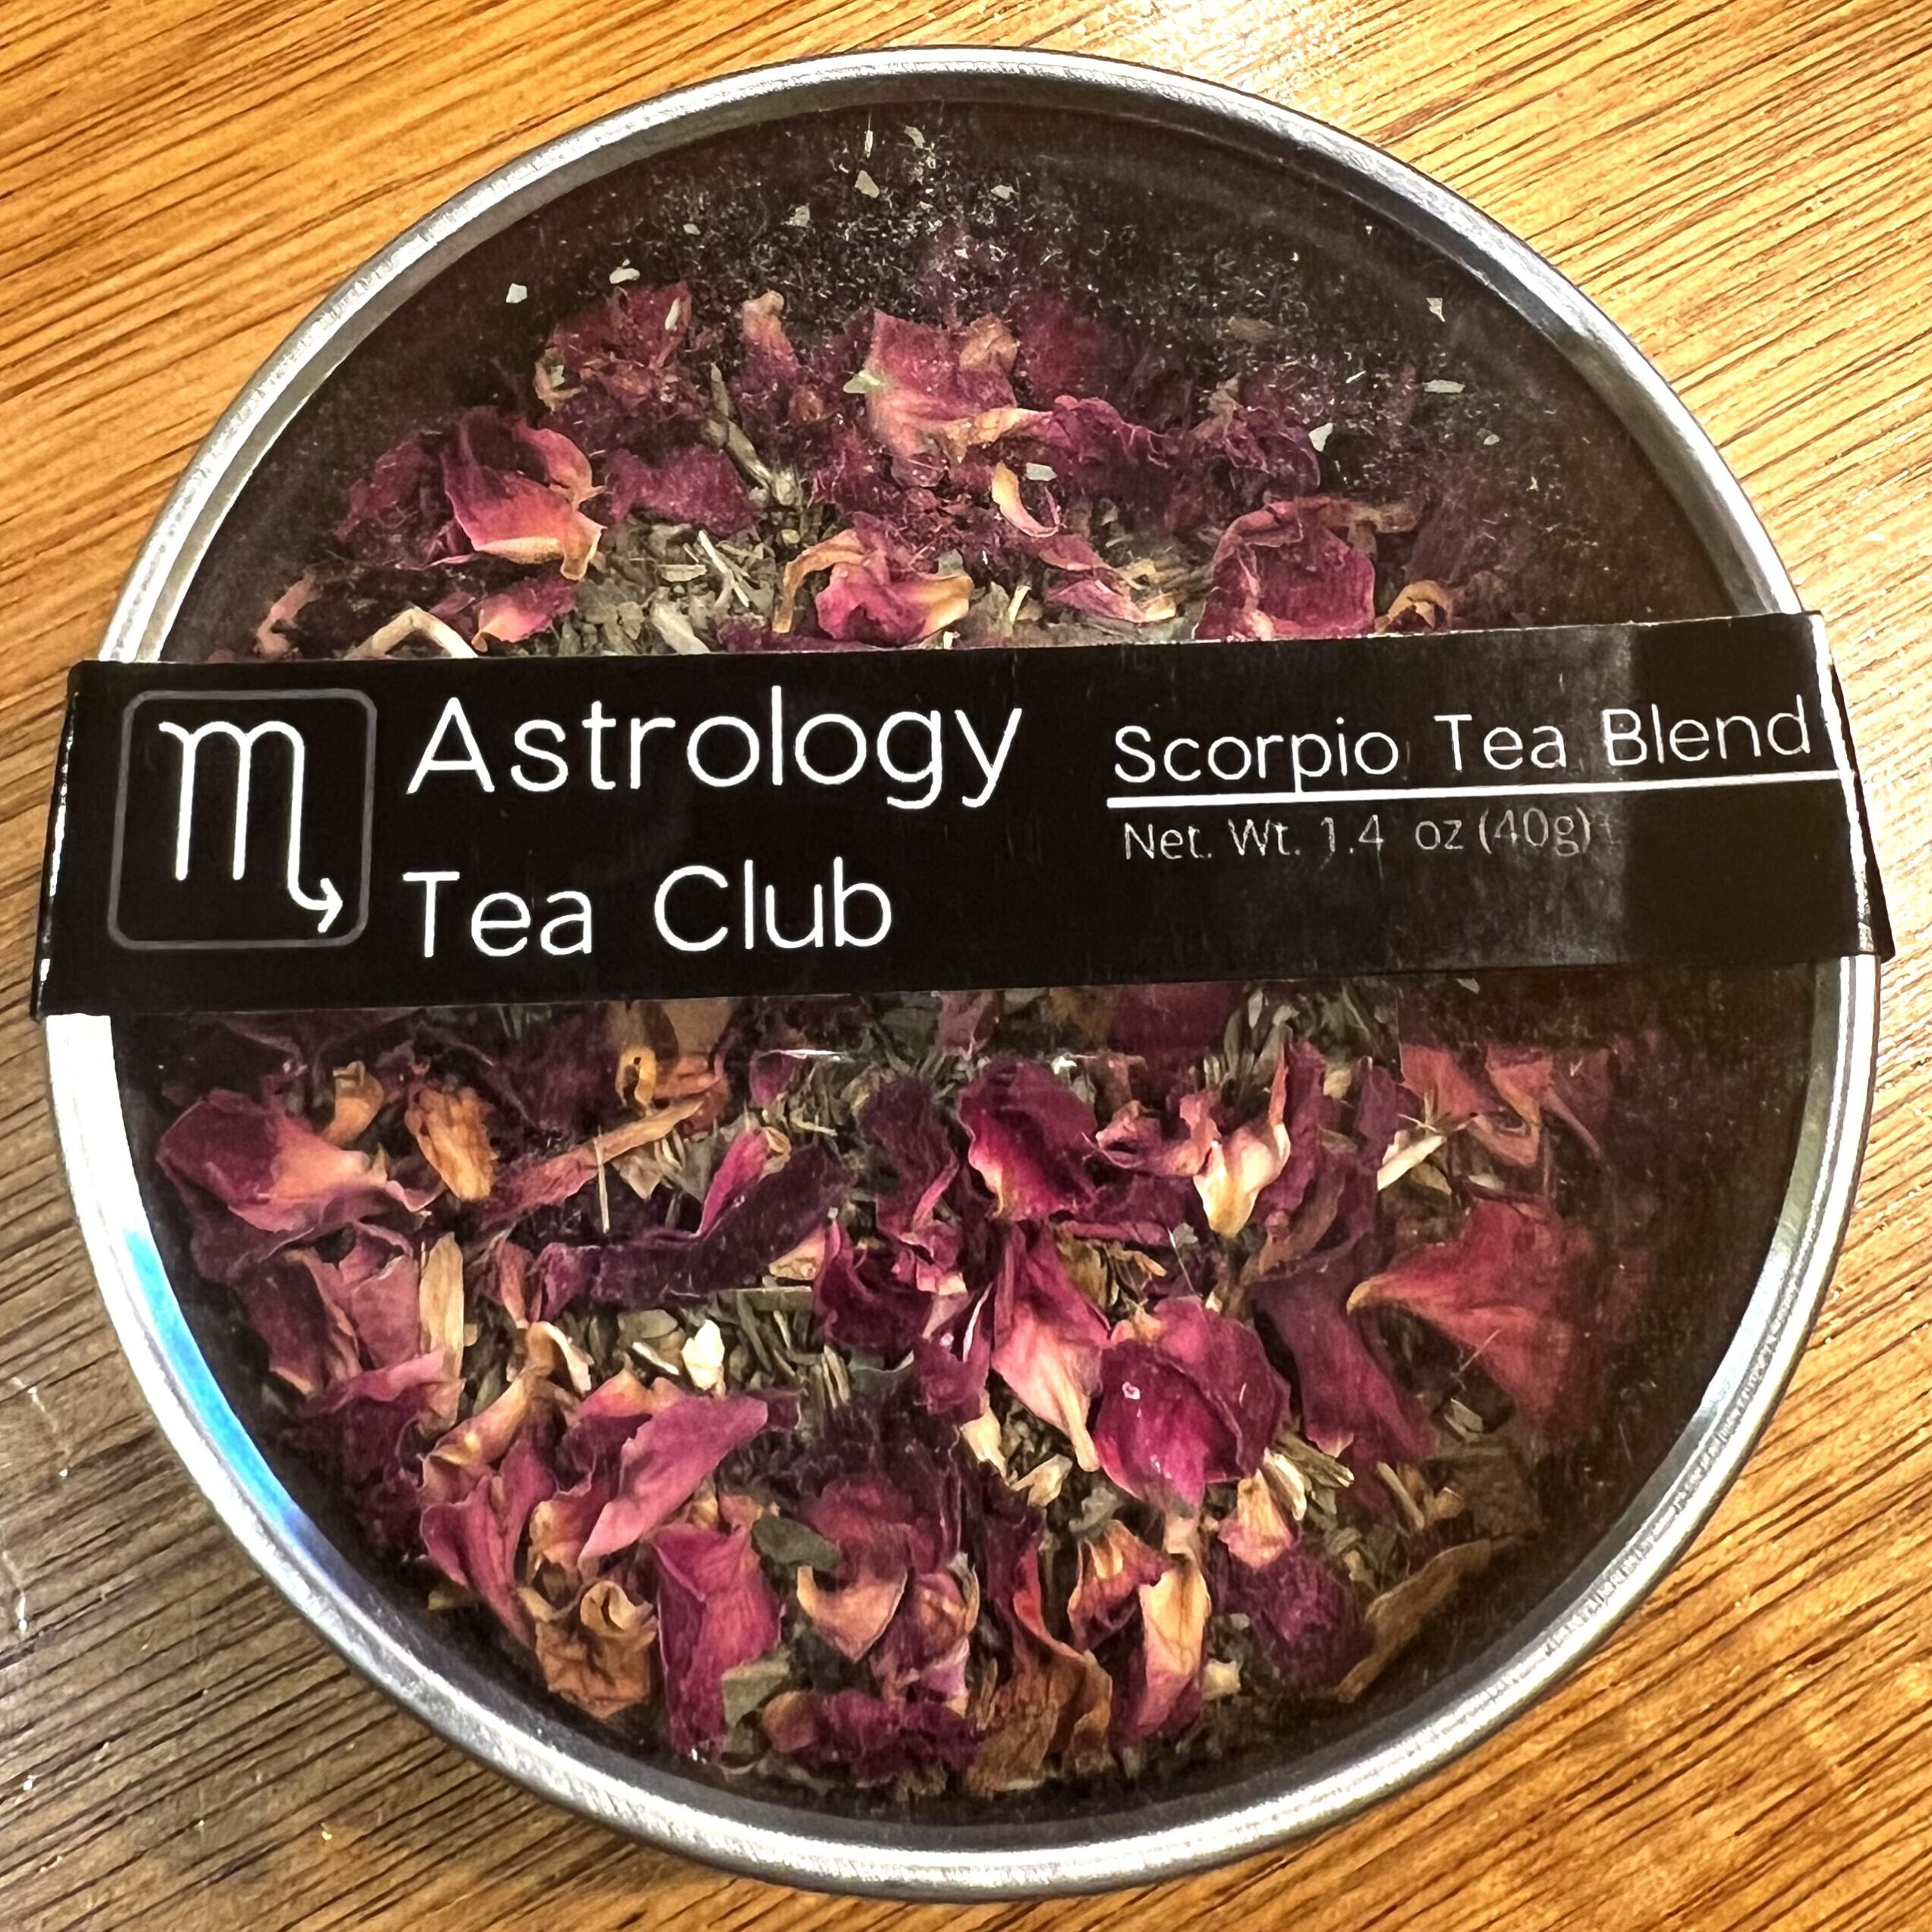 Astrology Tea Club